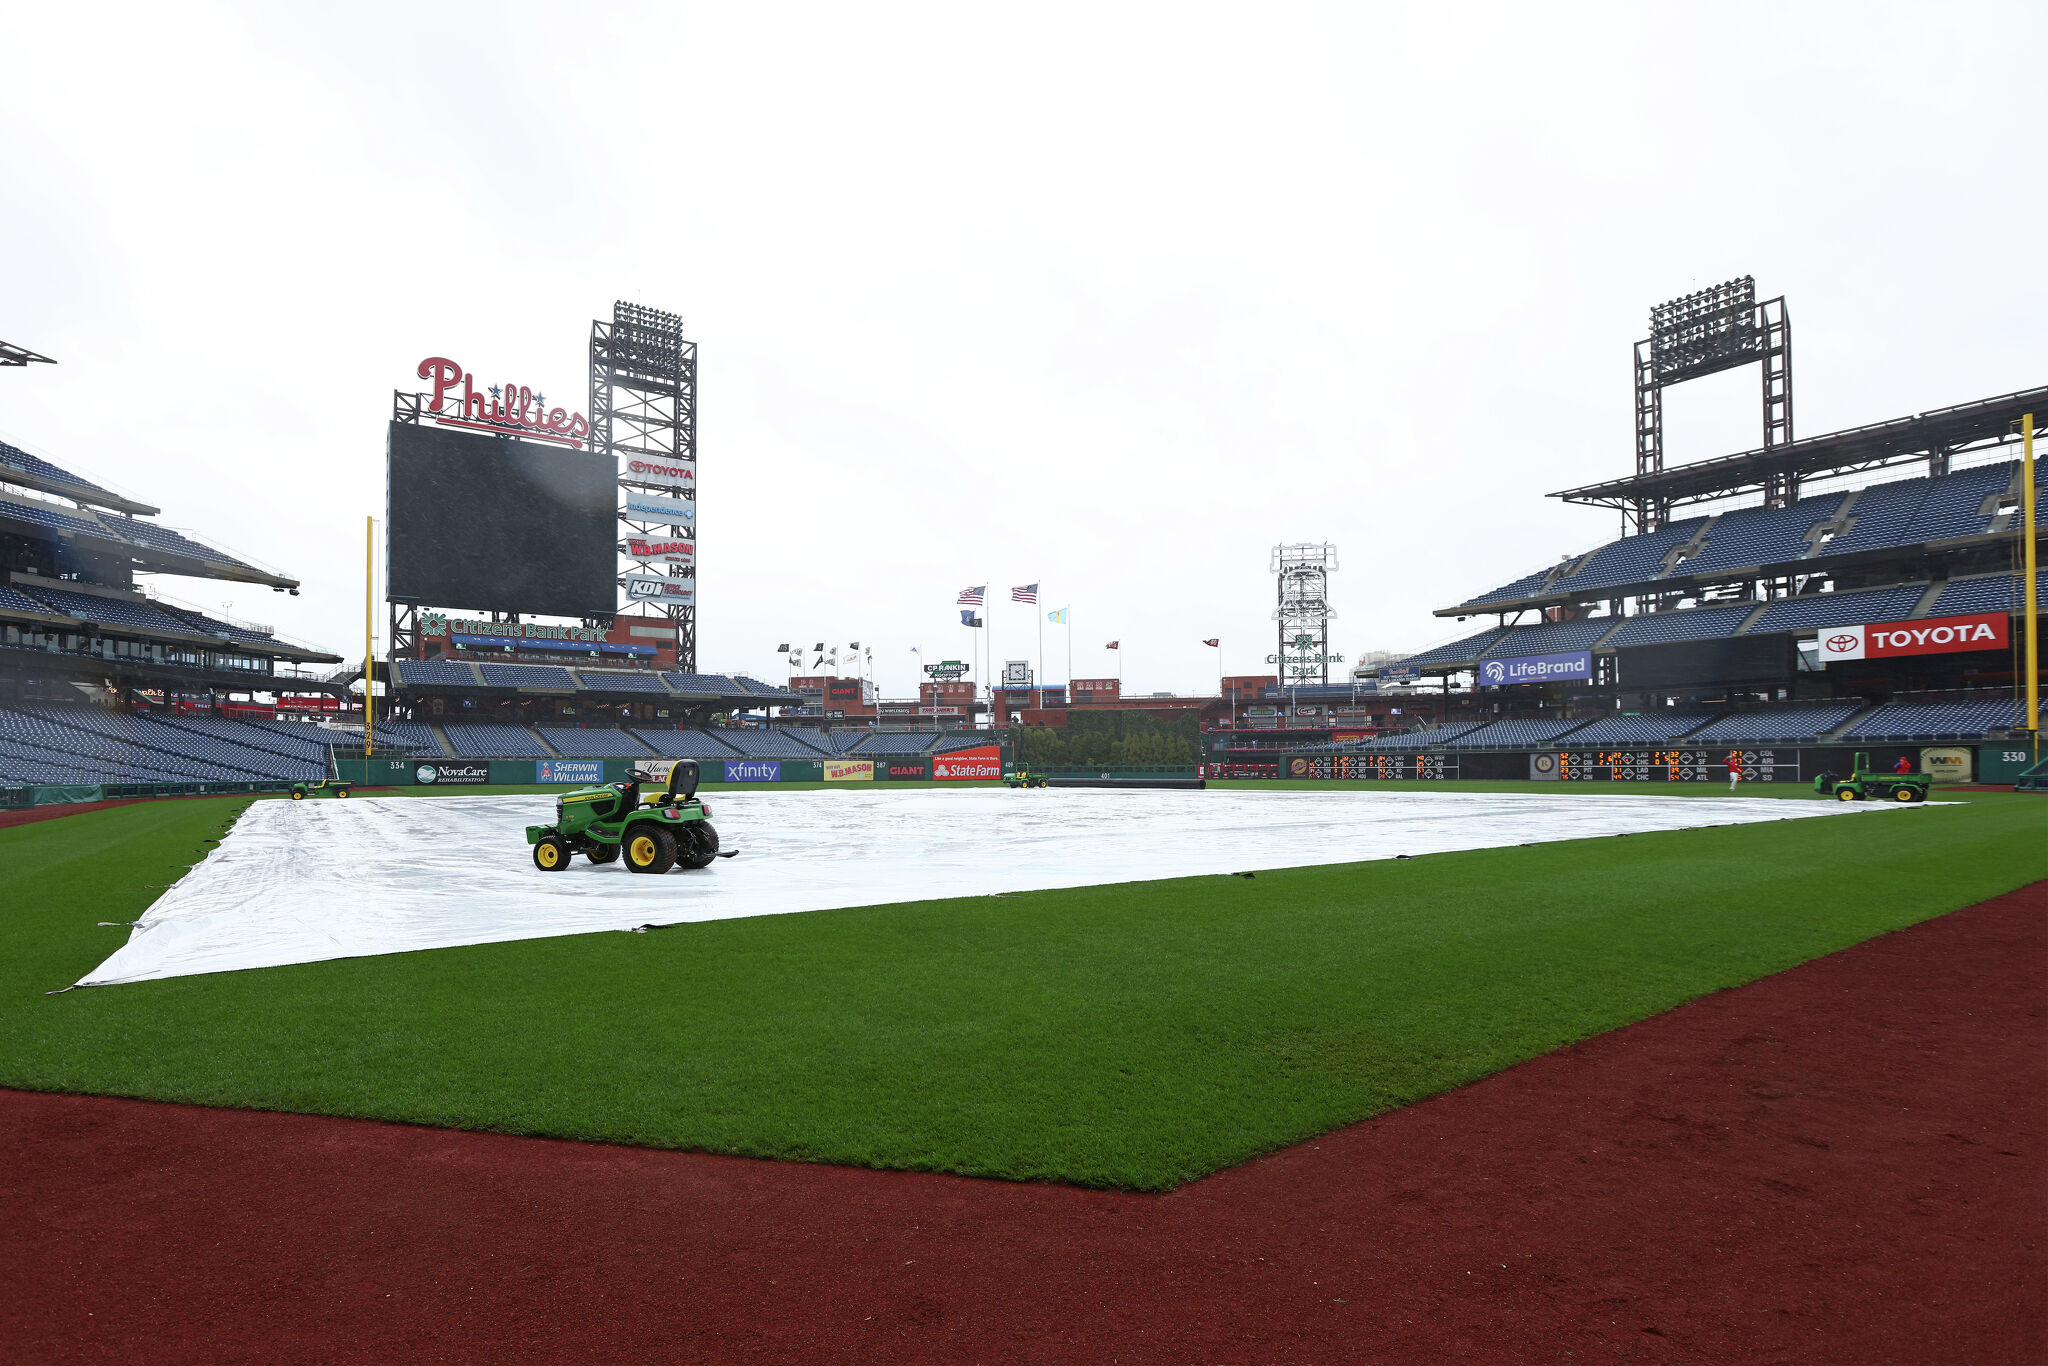 World Series Game 3 postponed due to rain in Philadelphia